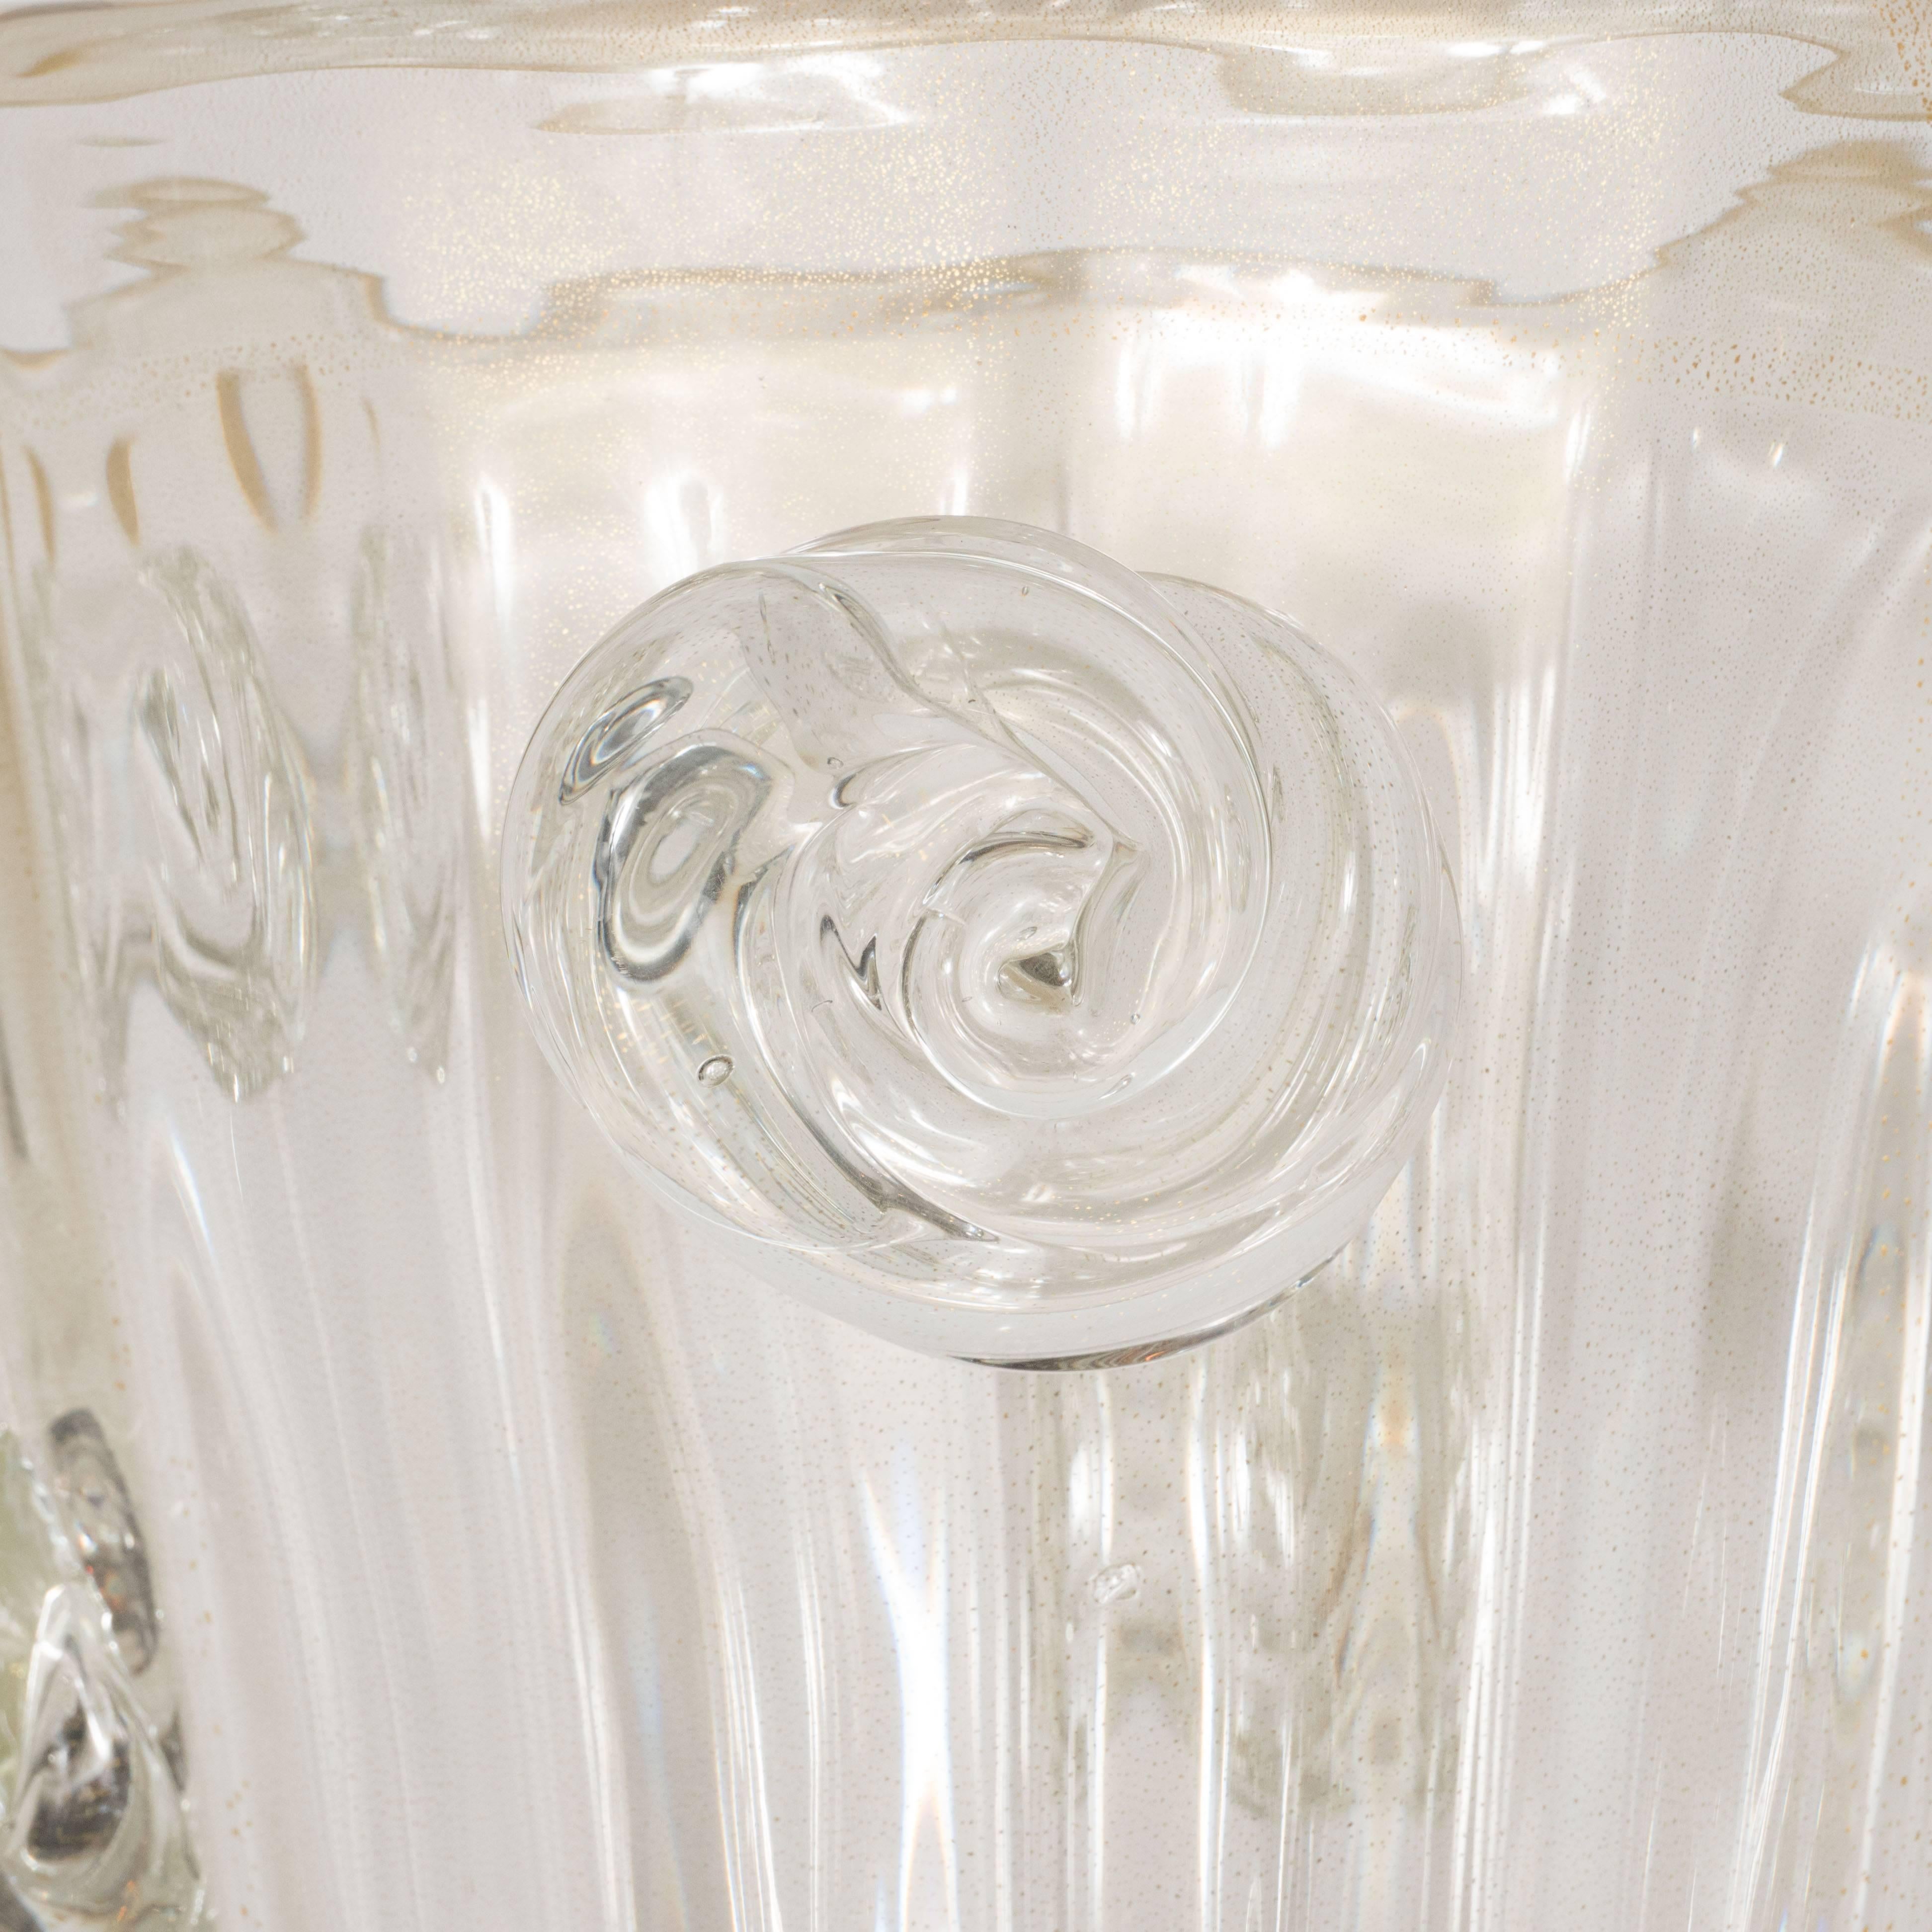 Exquisite Pair of Art Deco Murano Venetian Glass Up-Lights with 24K Gold Flecks 1